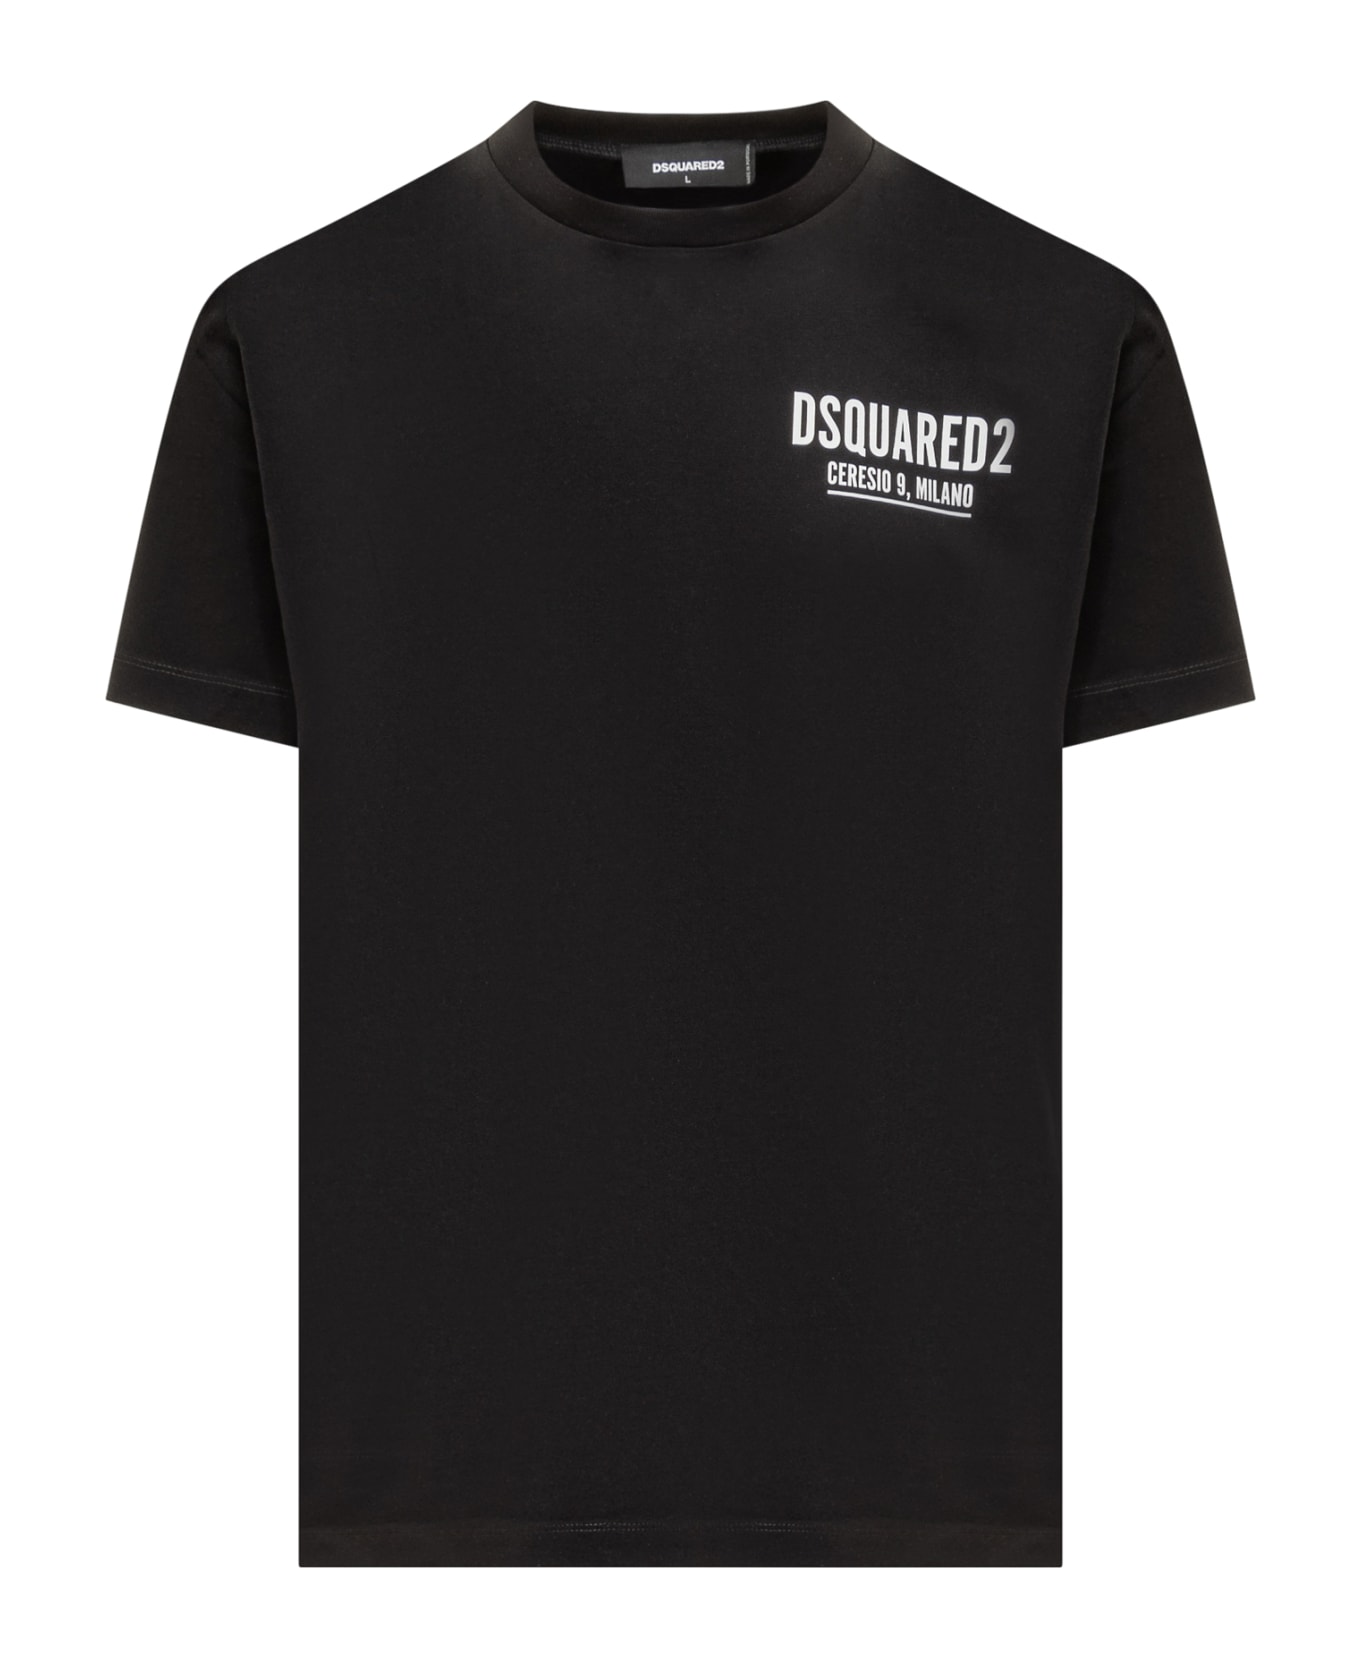 Dsquared2 Ceresio 9 T-shirt - BLACK